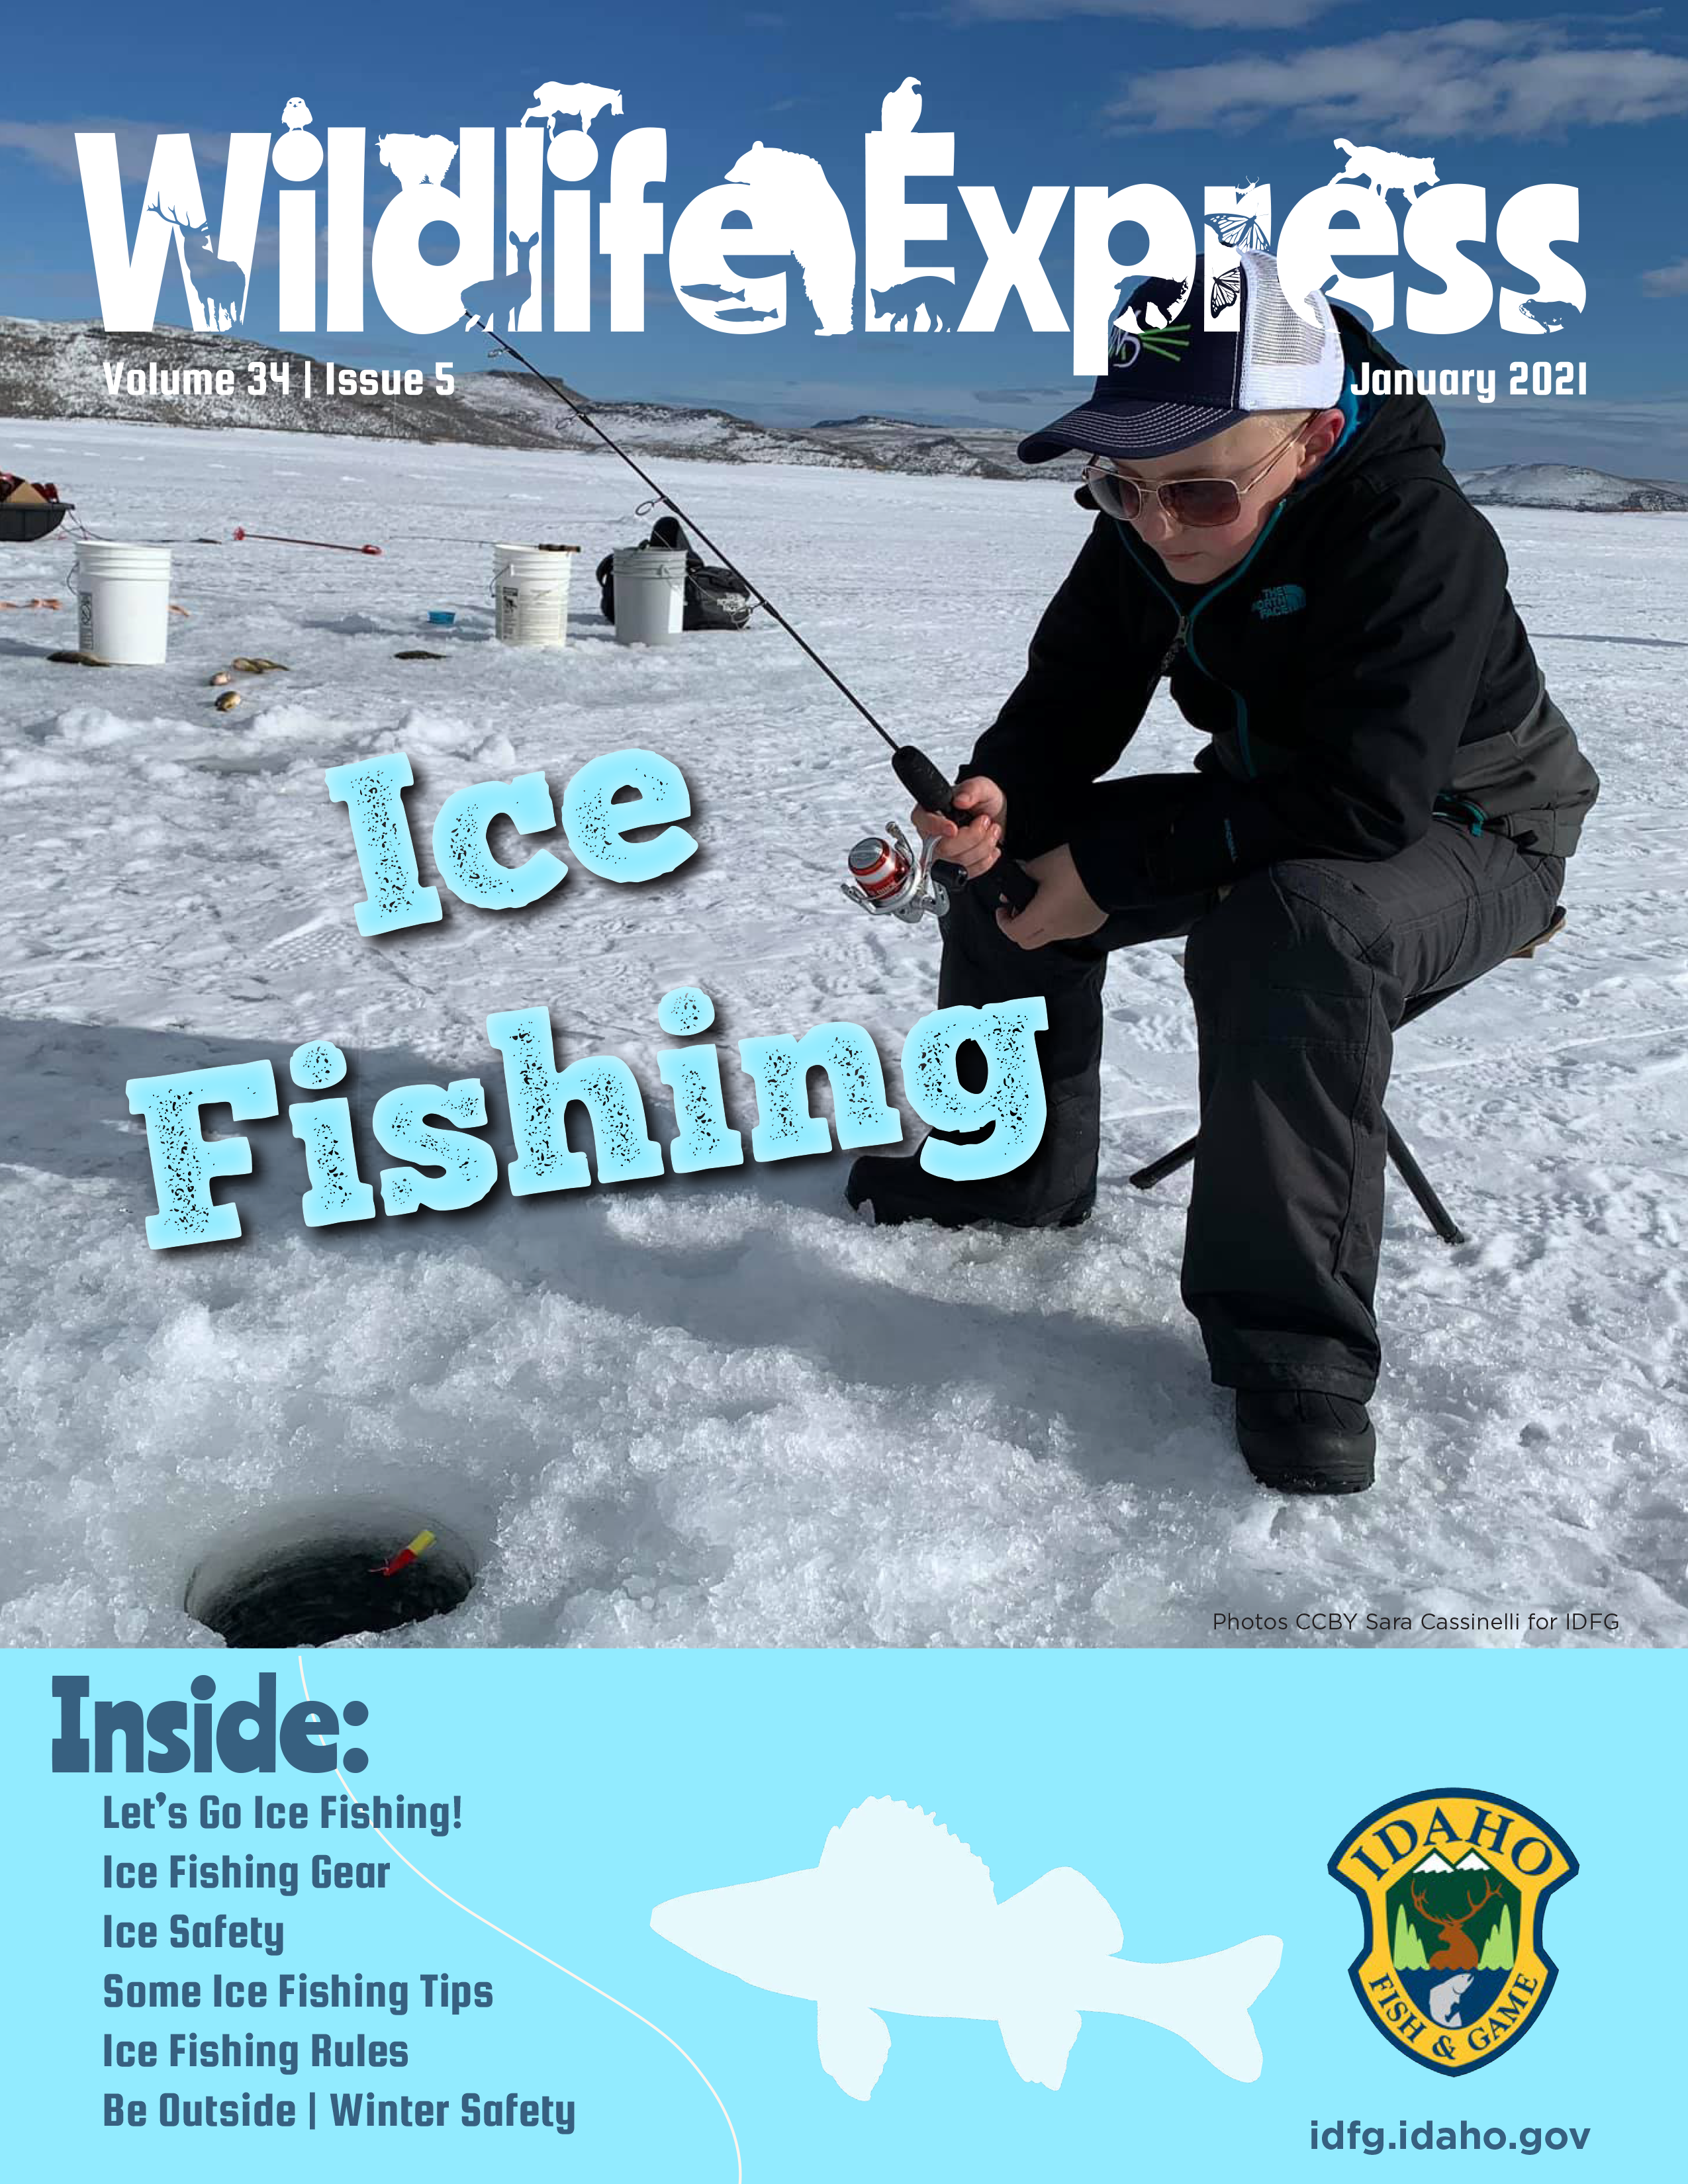 Fish education on ice